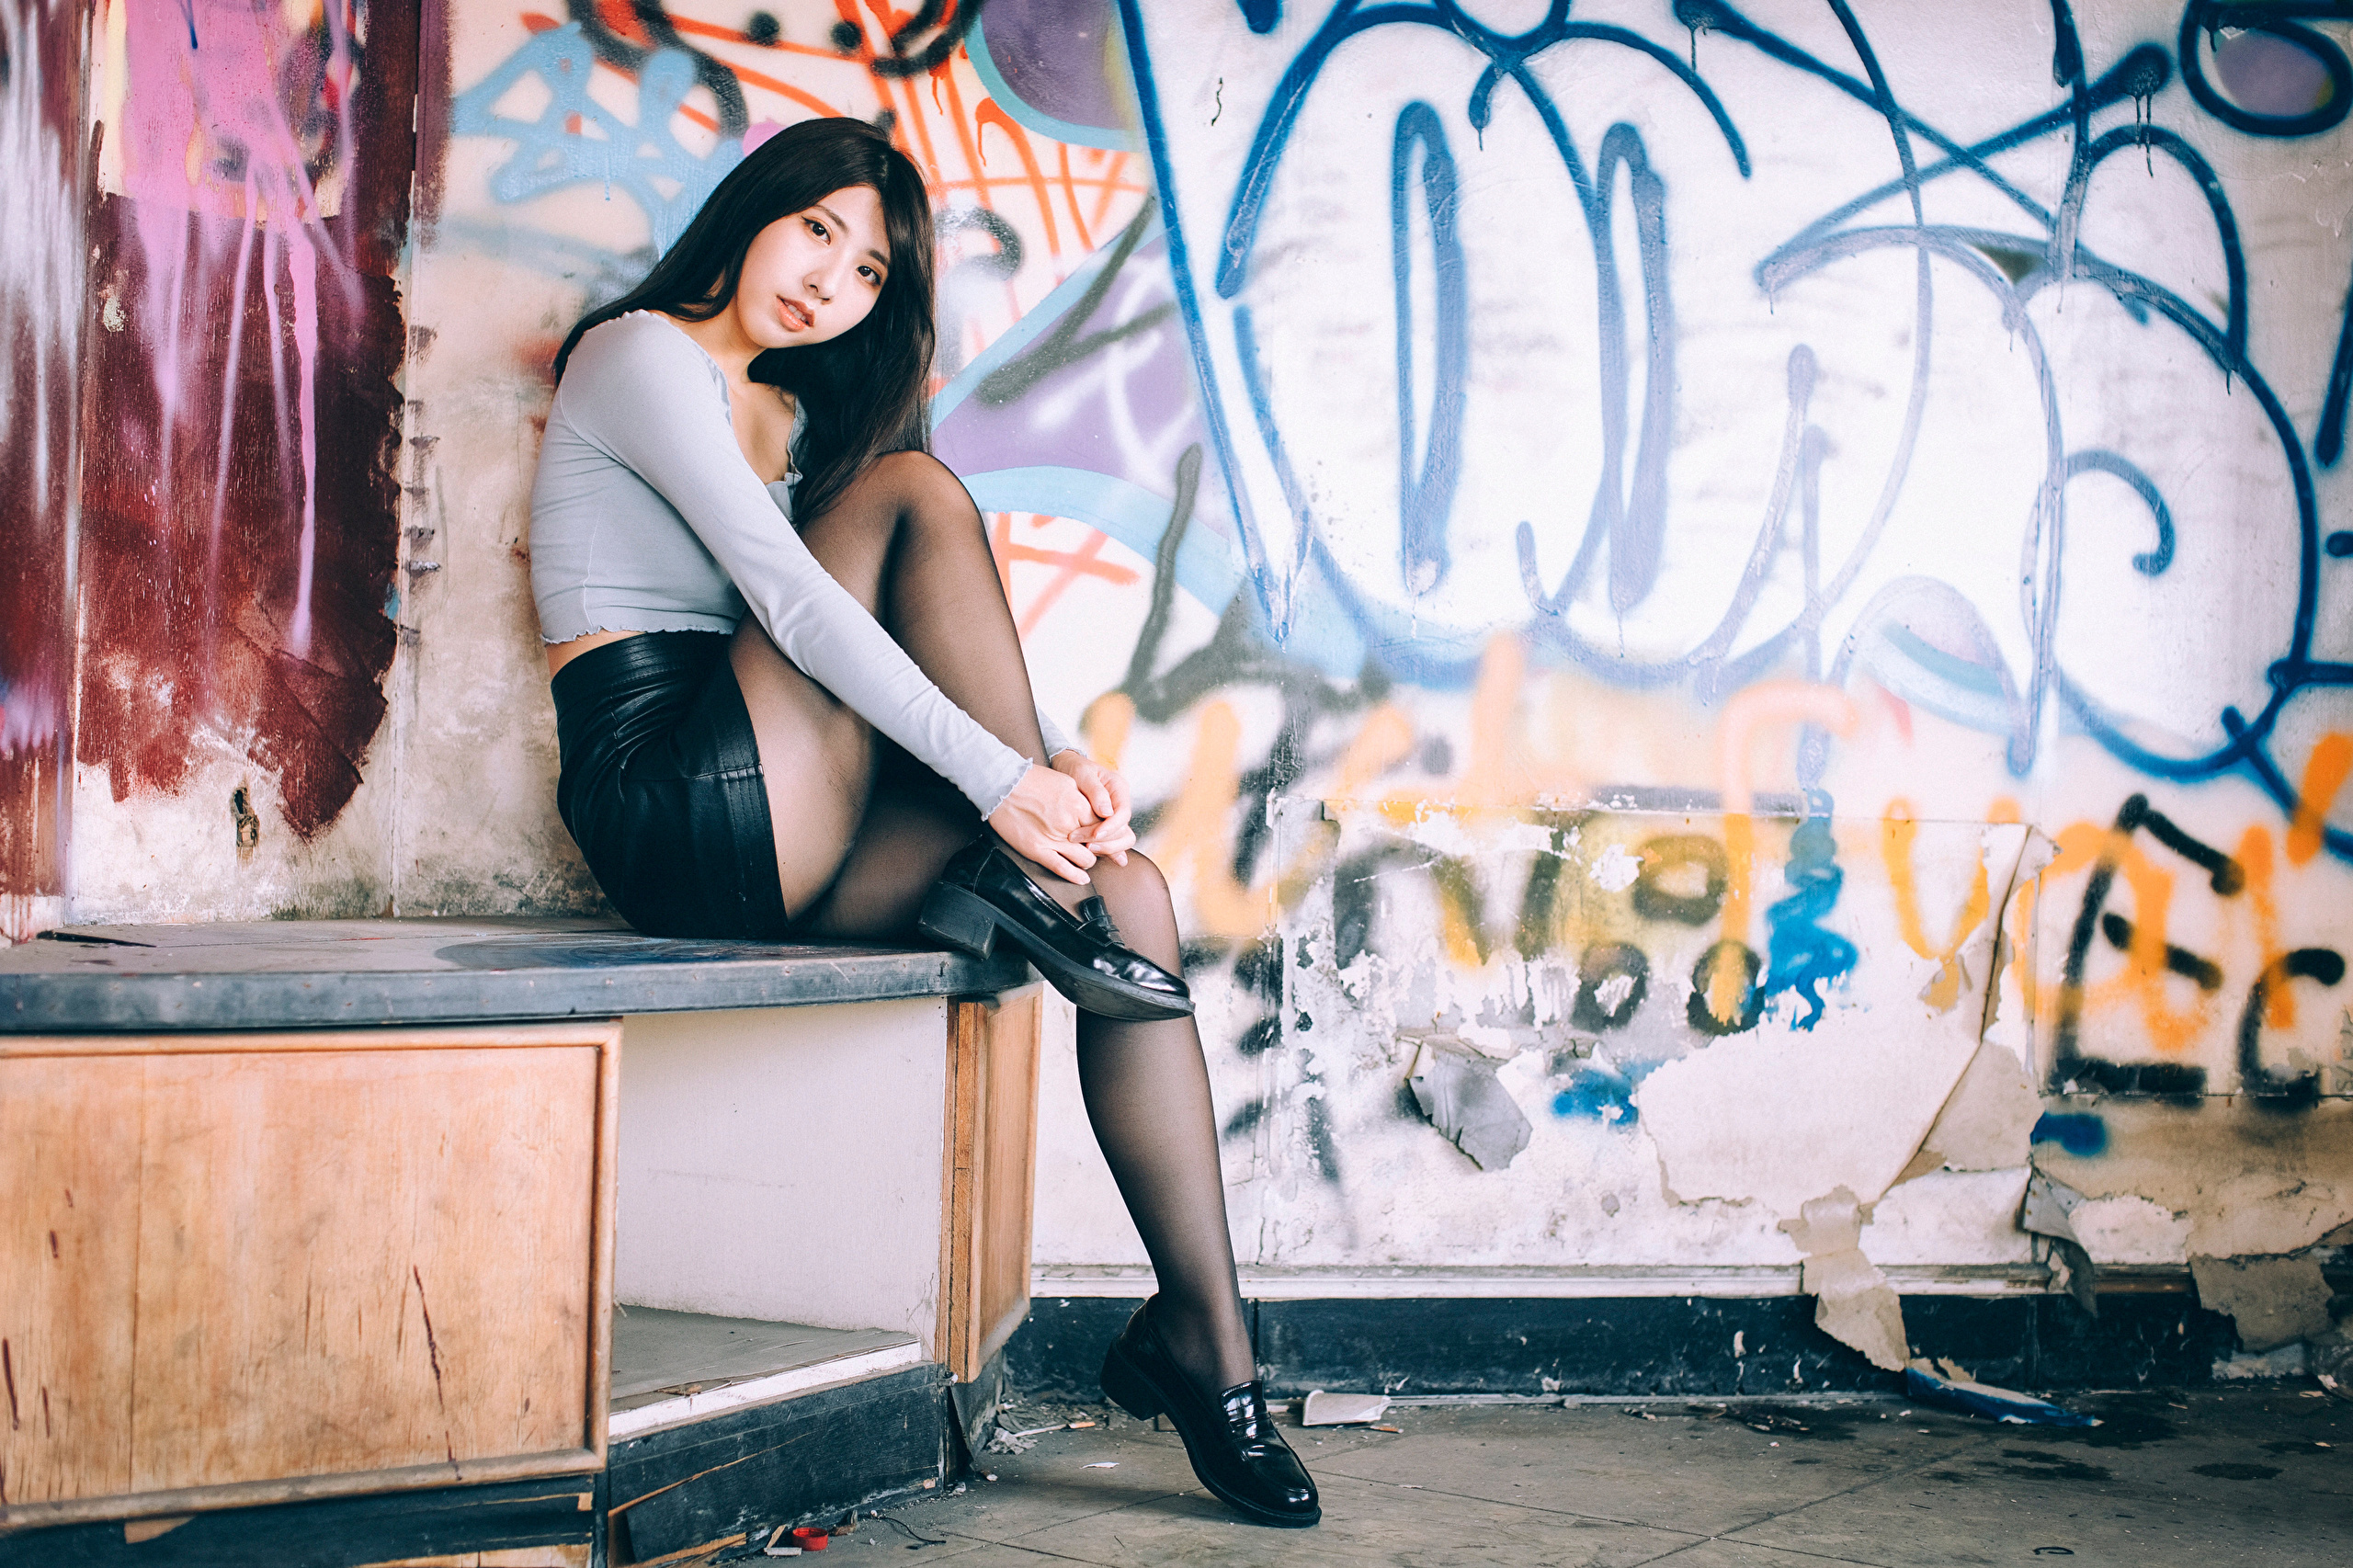 Asian Model Women Long Hair Dark Hair Nylons Leather Skirts Blue Tops Sitting Graffiti 2560x1706